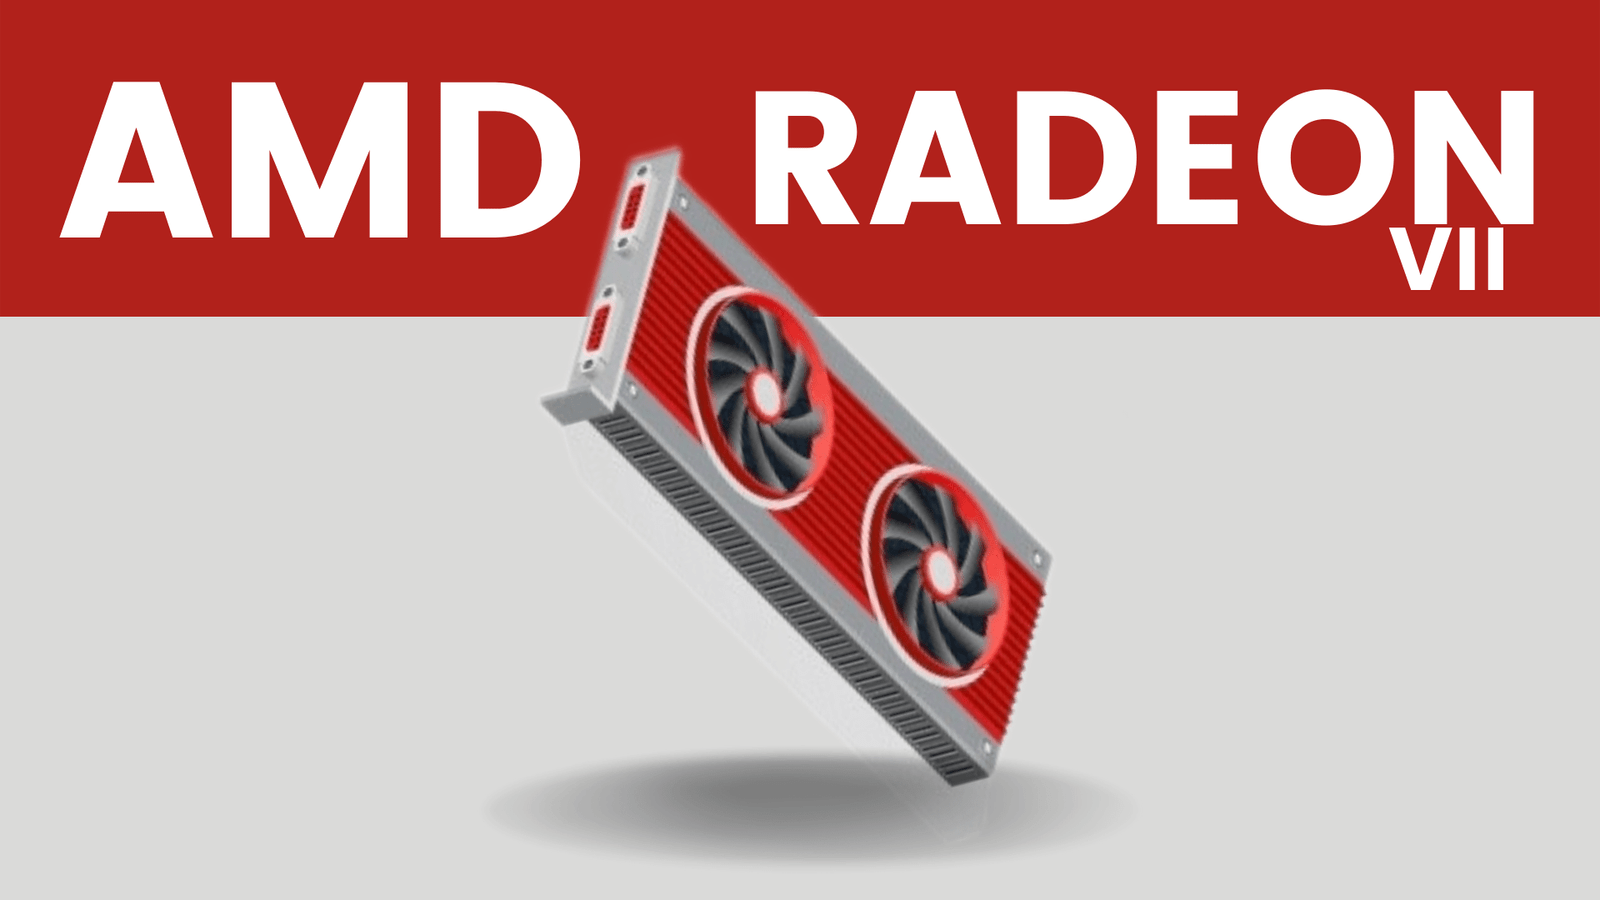 AMD Radeon VII Mining Settings and Hashrate